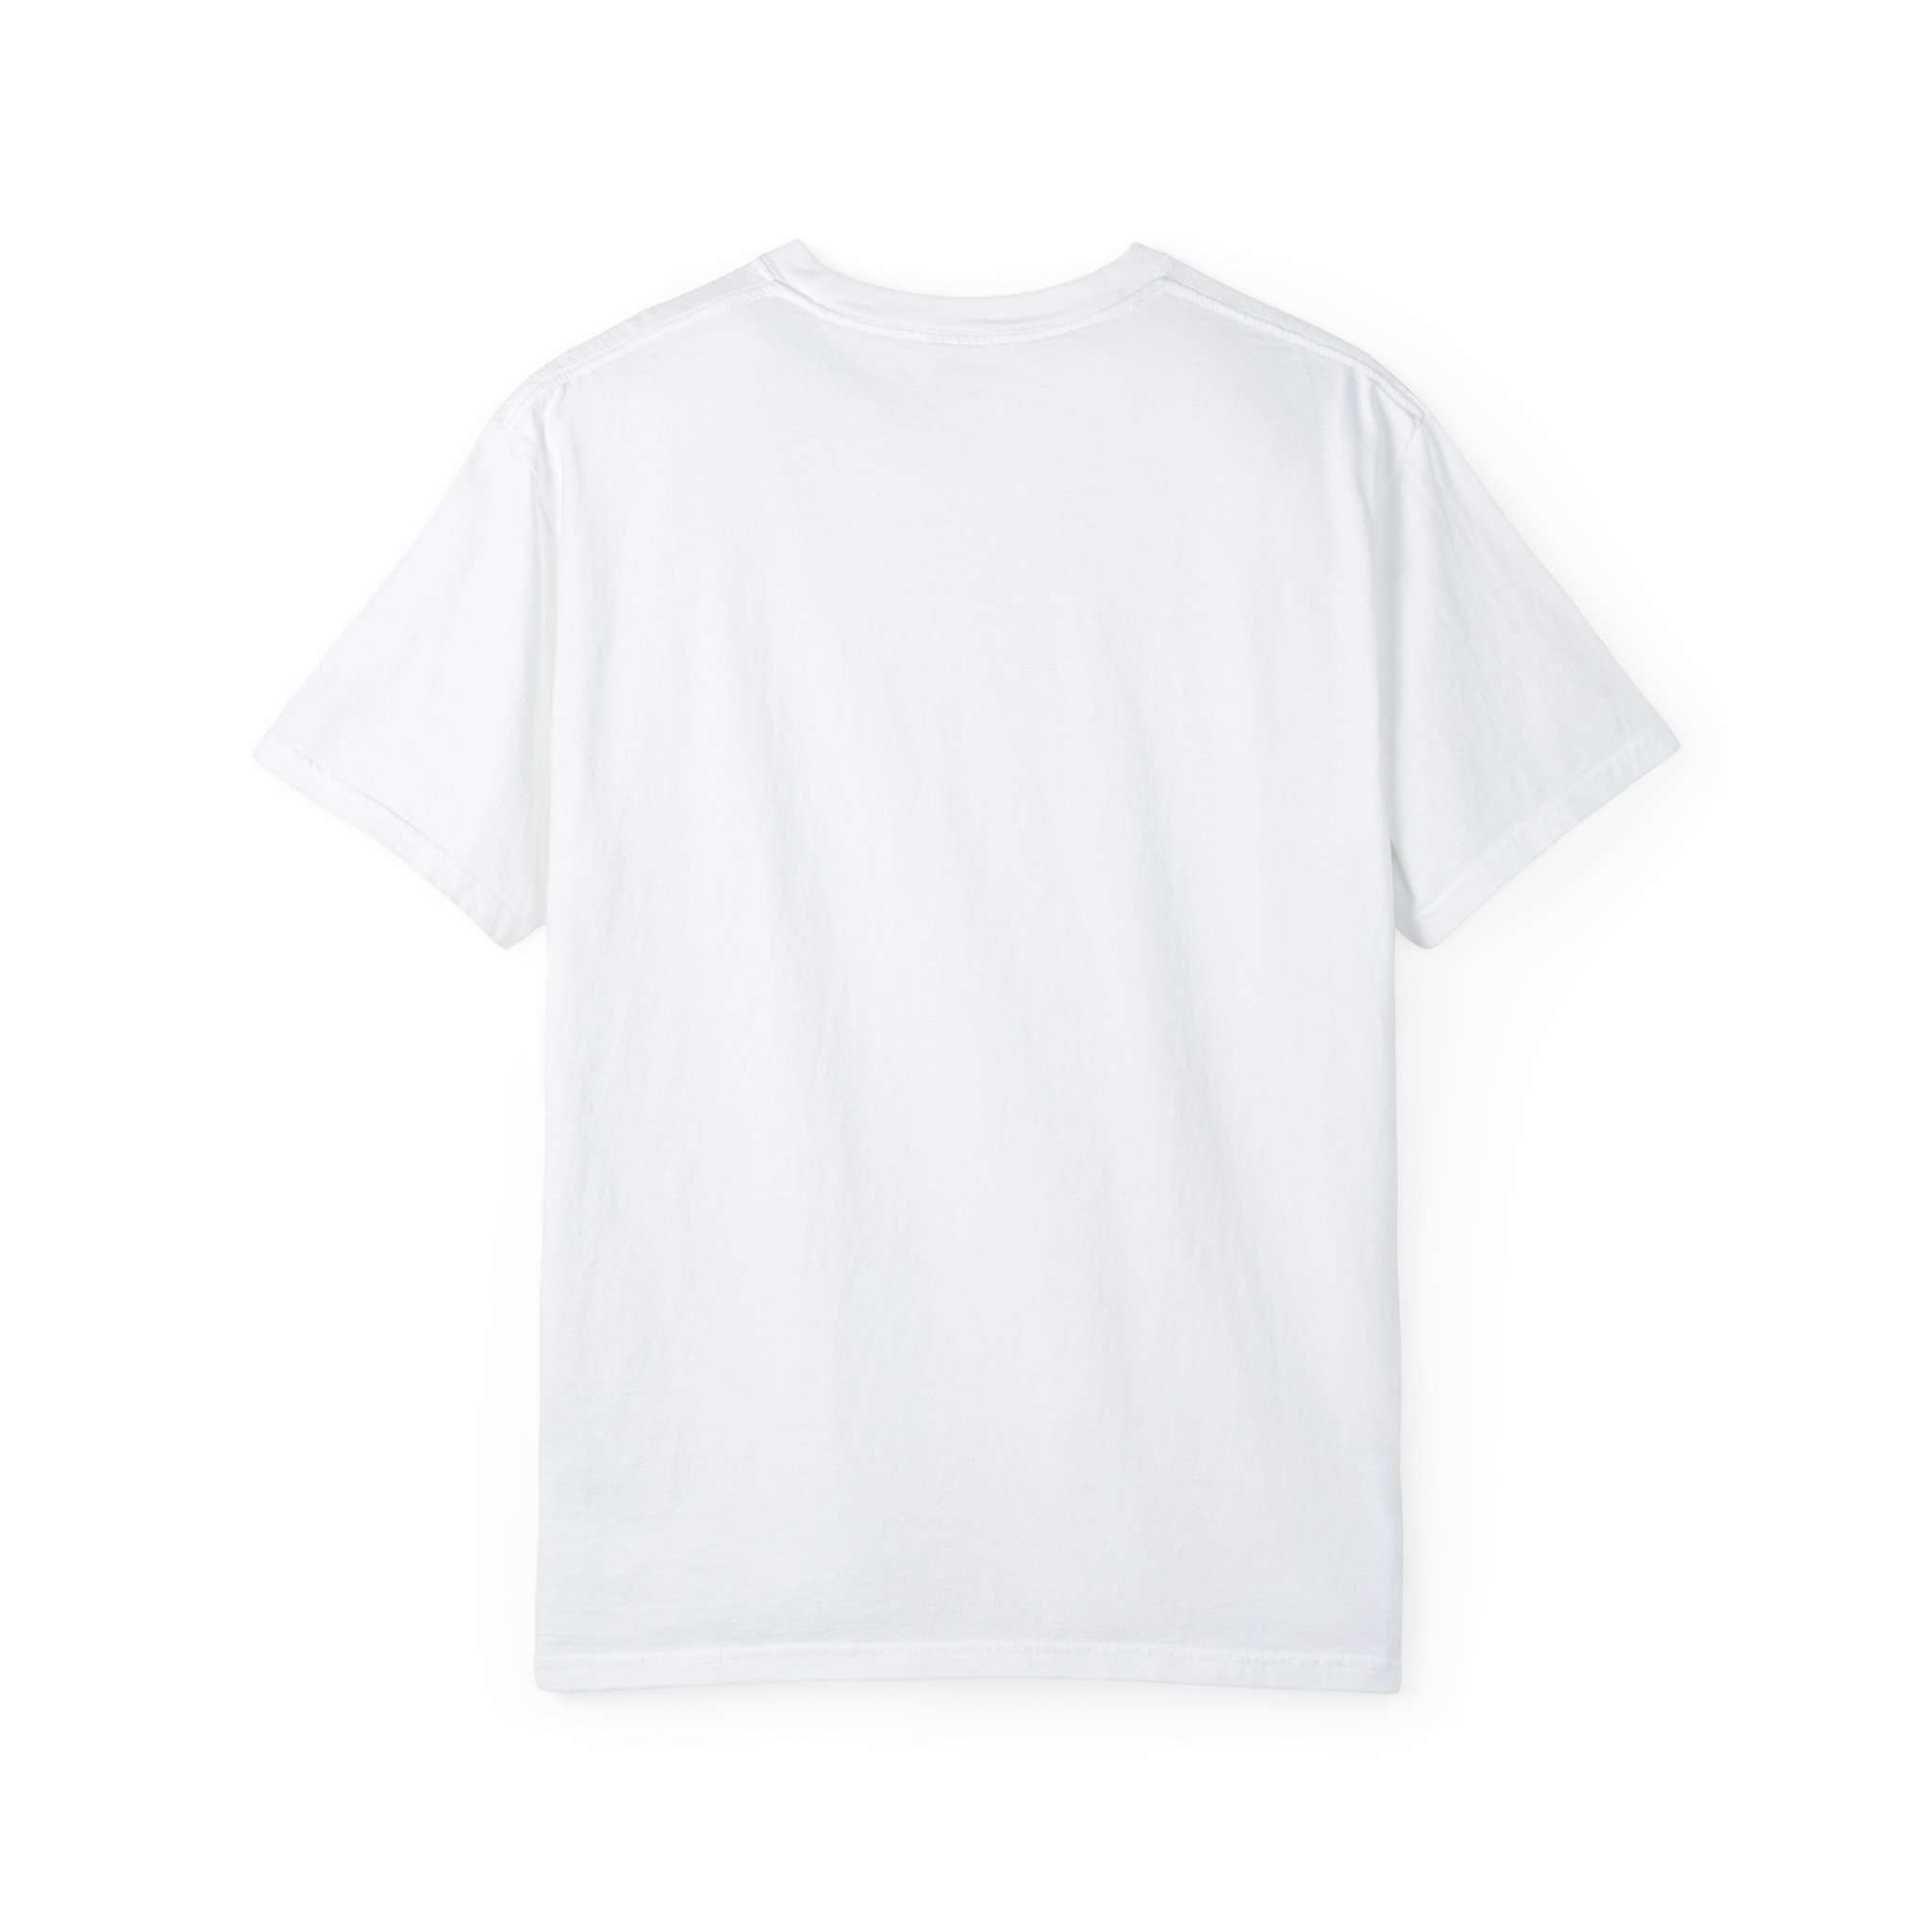 Toji Fushiguro Unisex Garment-Dyed T-shirt